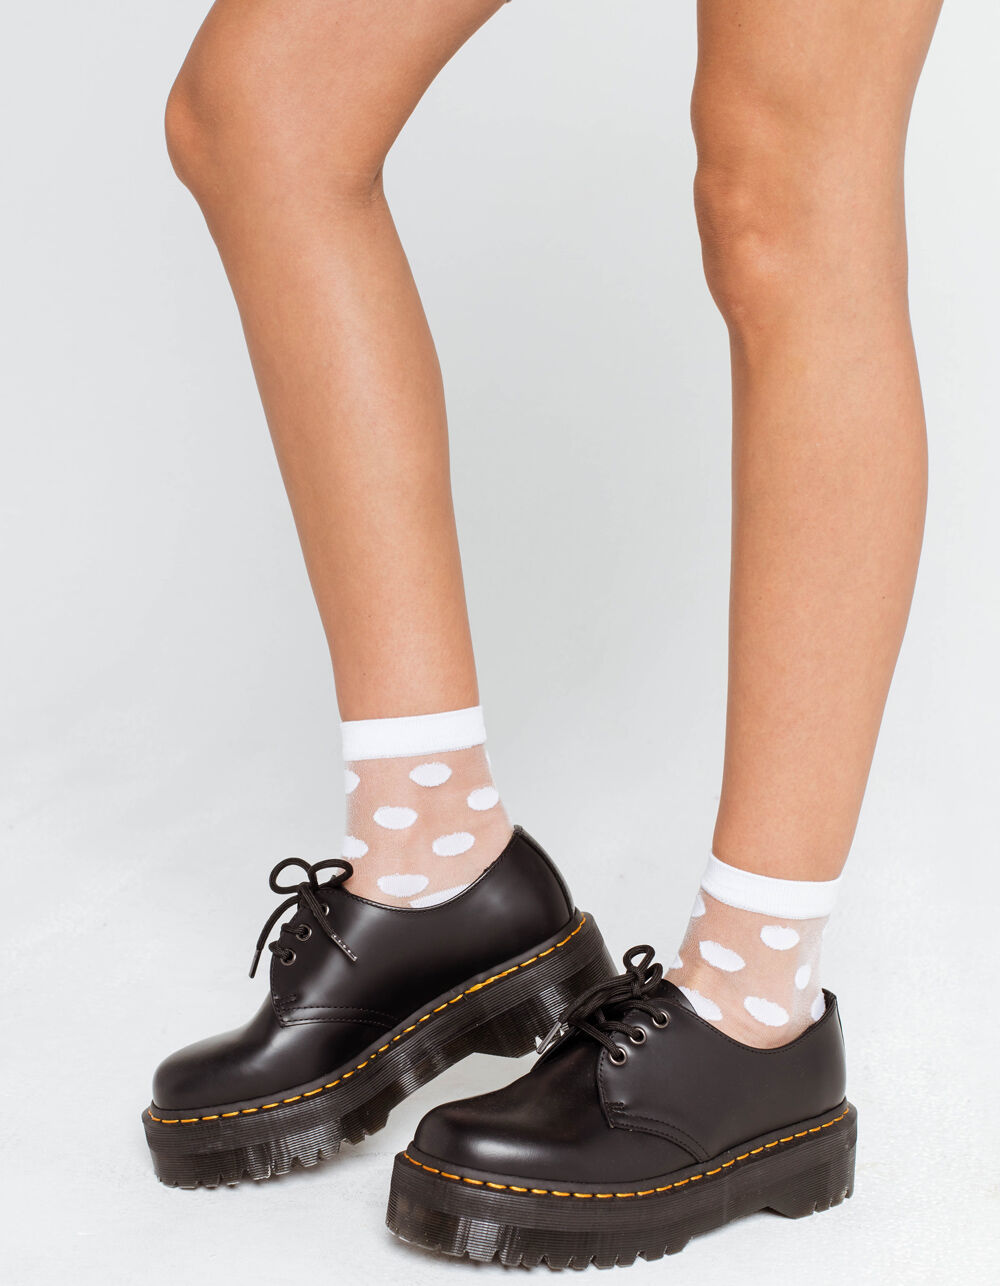 Sheer Polka Dot Womens Ankle Socks image number 1